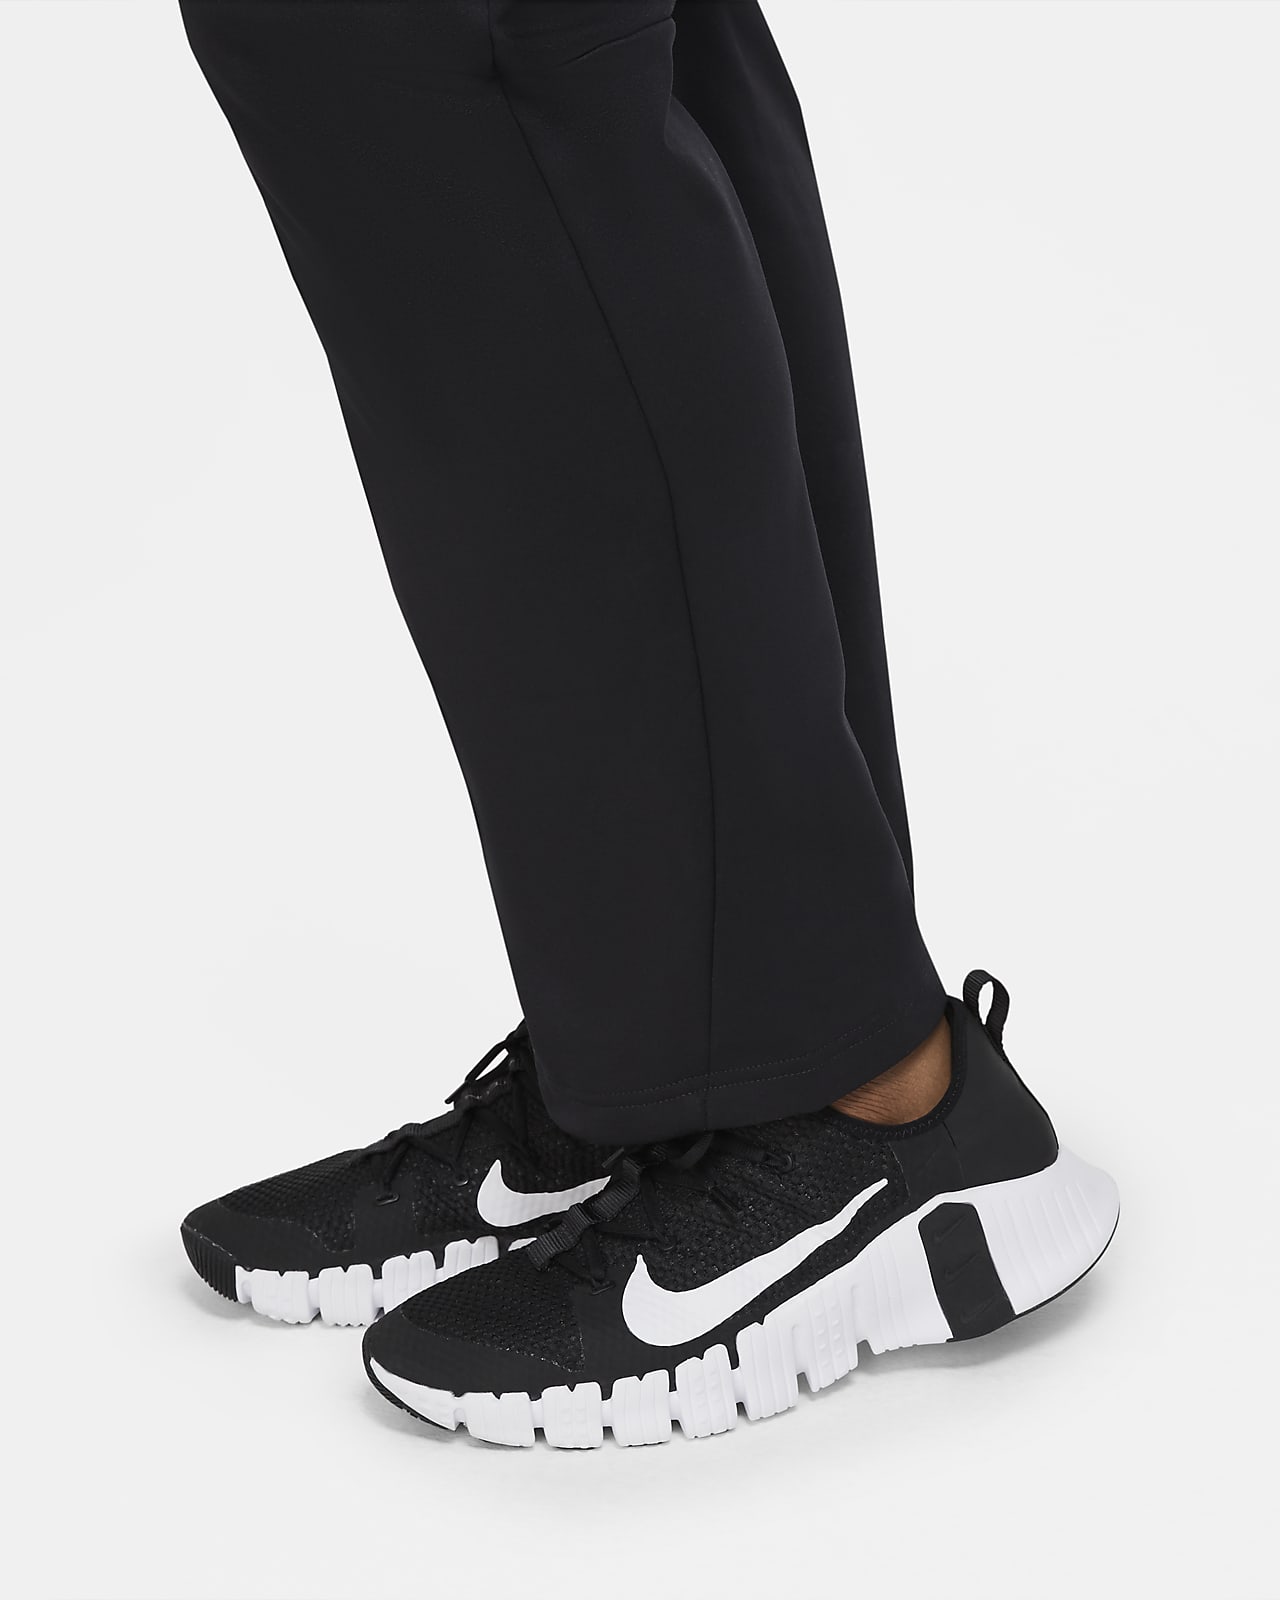 NWT Nike Men's XXL Therma Dri-Fit GRAY Tapered Fleece Pants Joggers  932255-063 | eBay